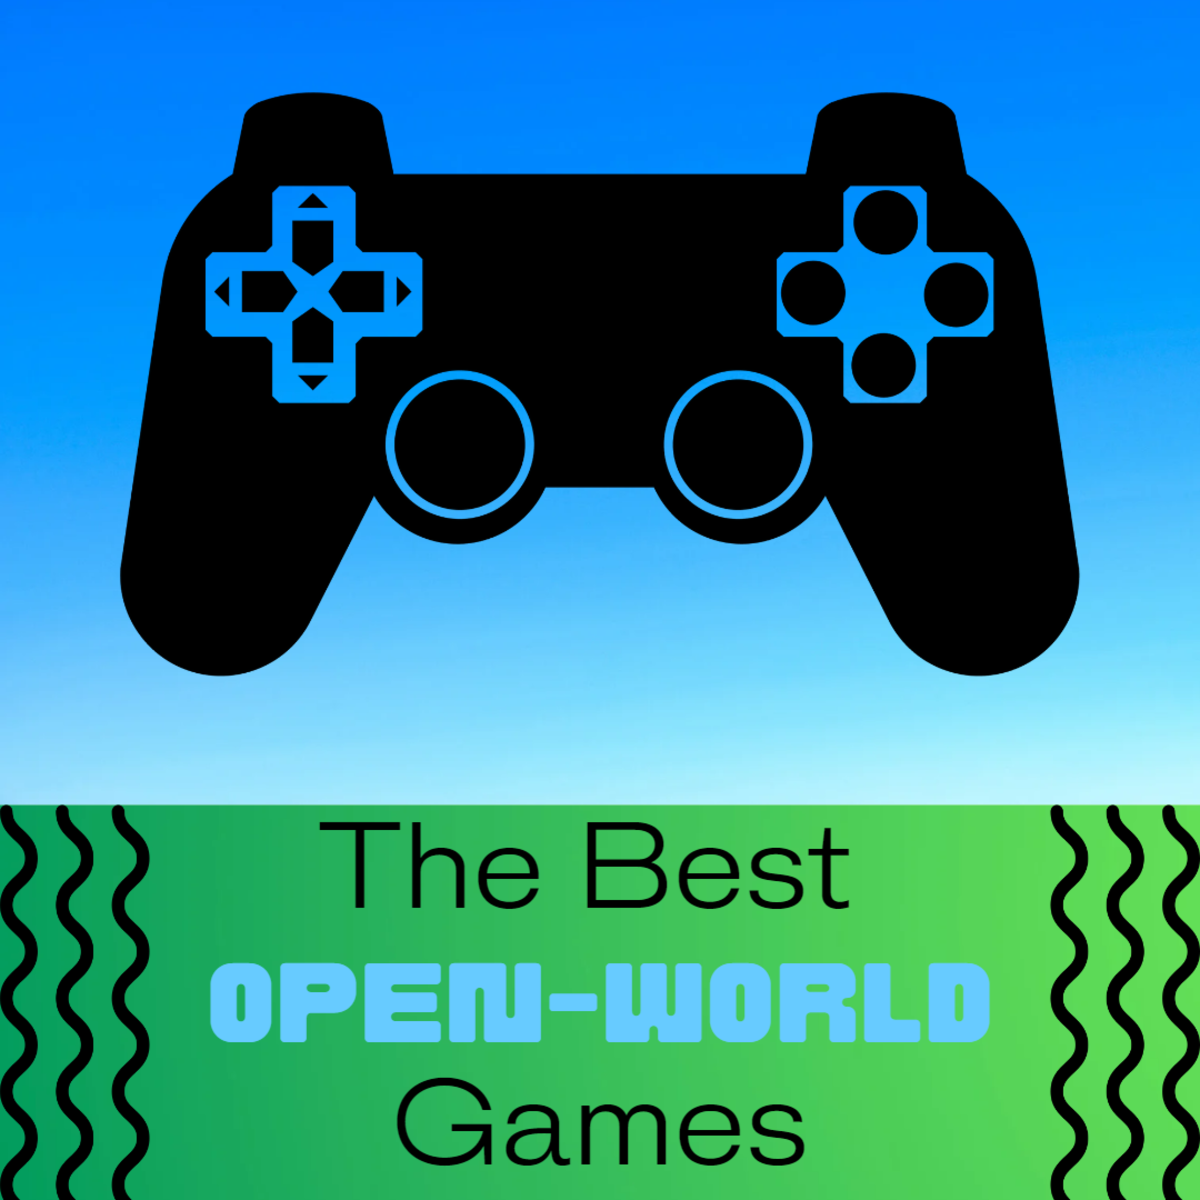 Top 7: The Best Open-World Games